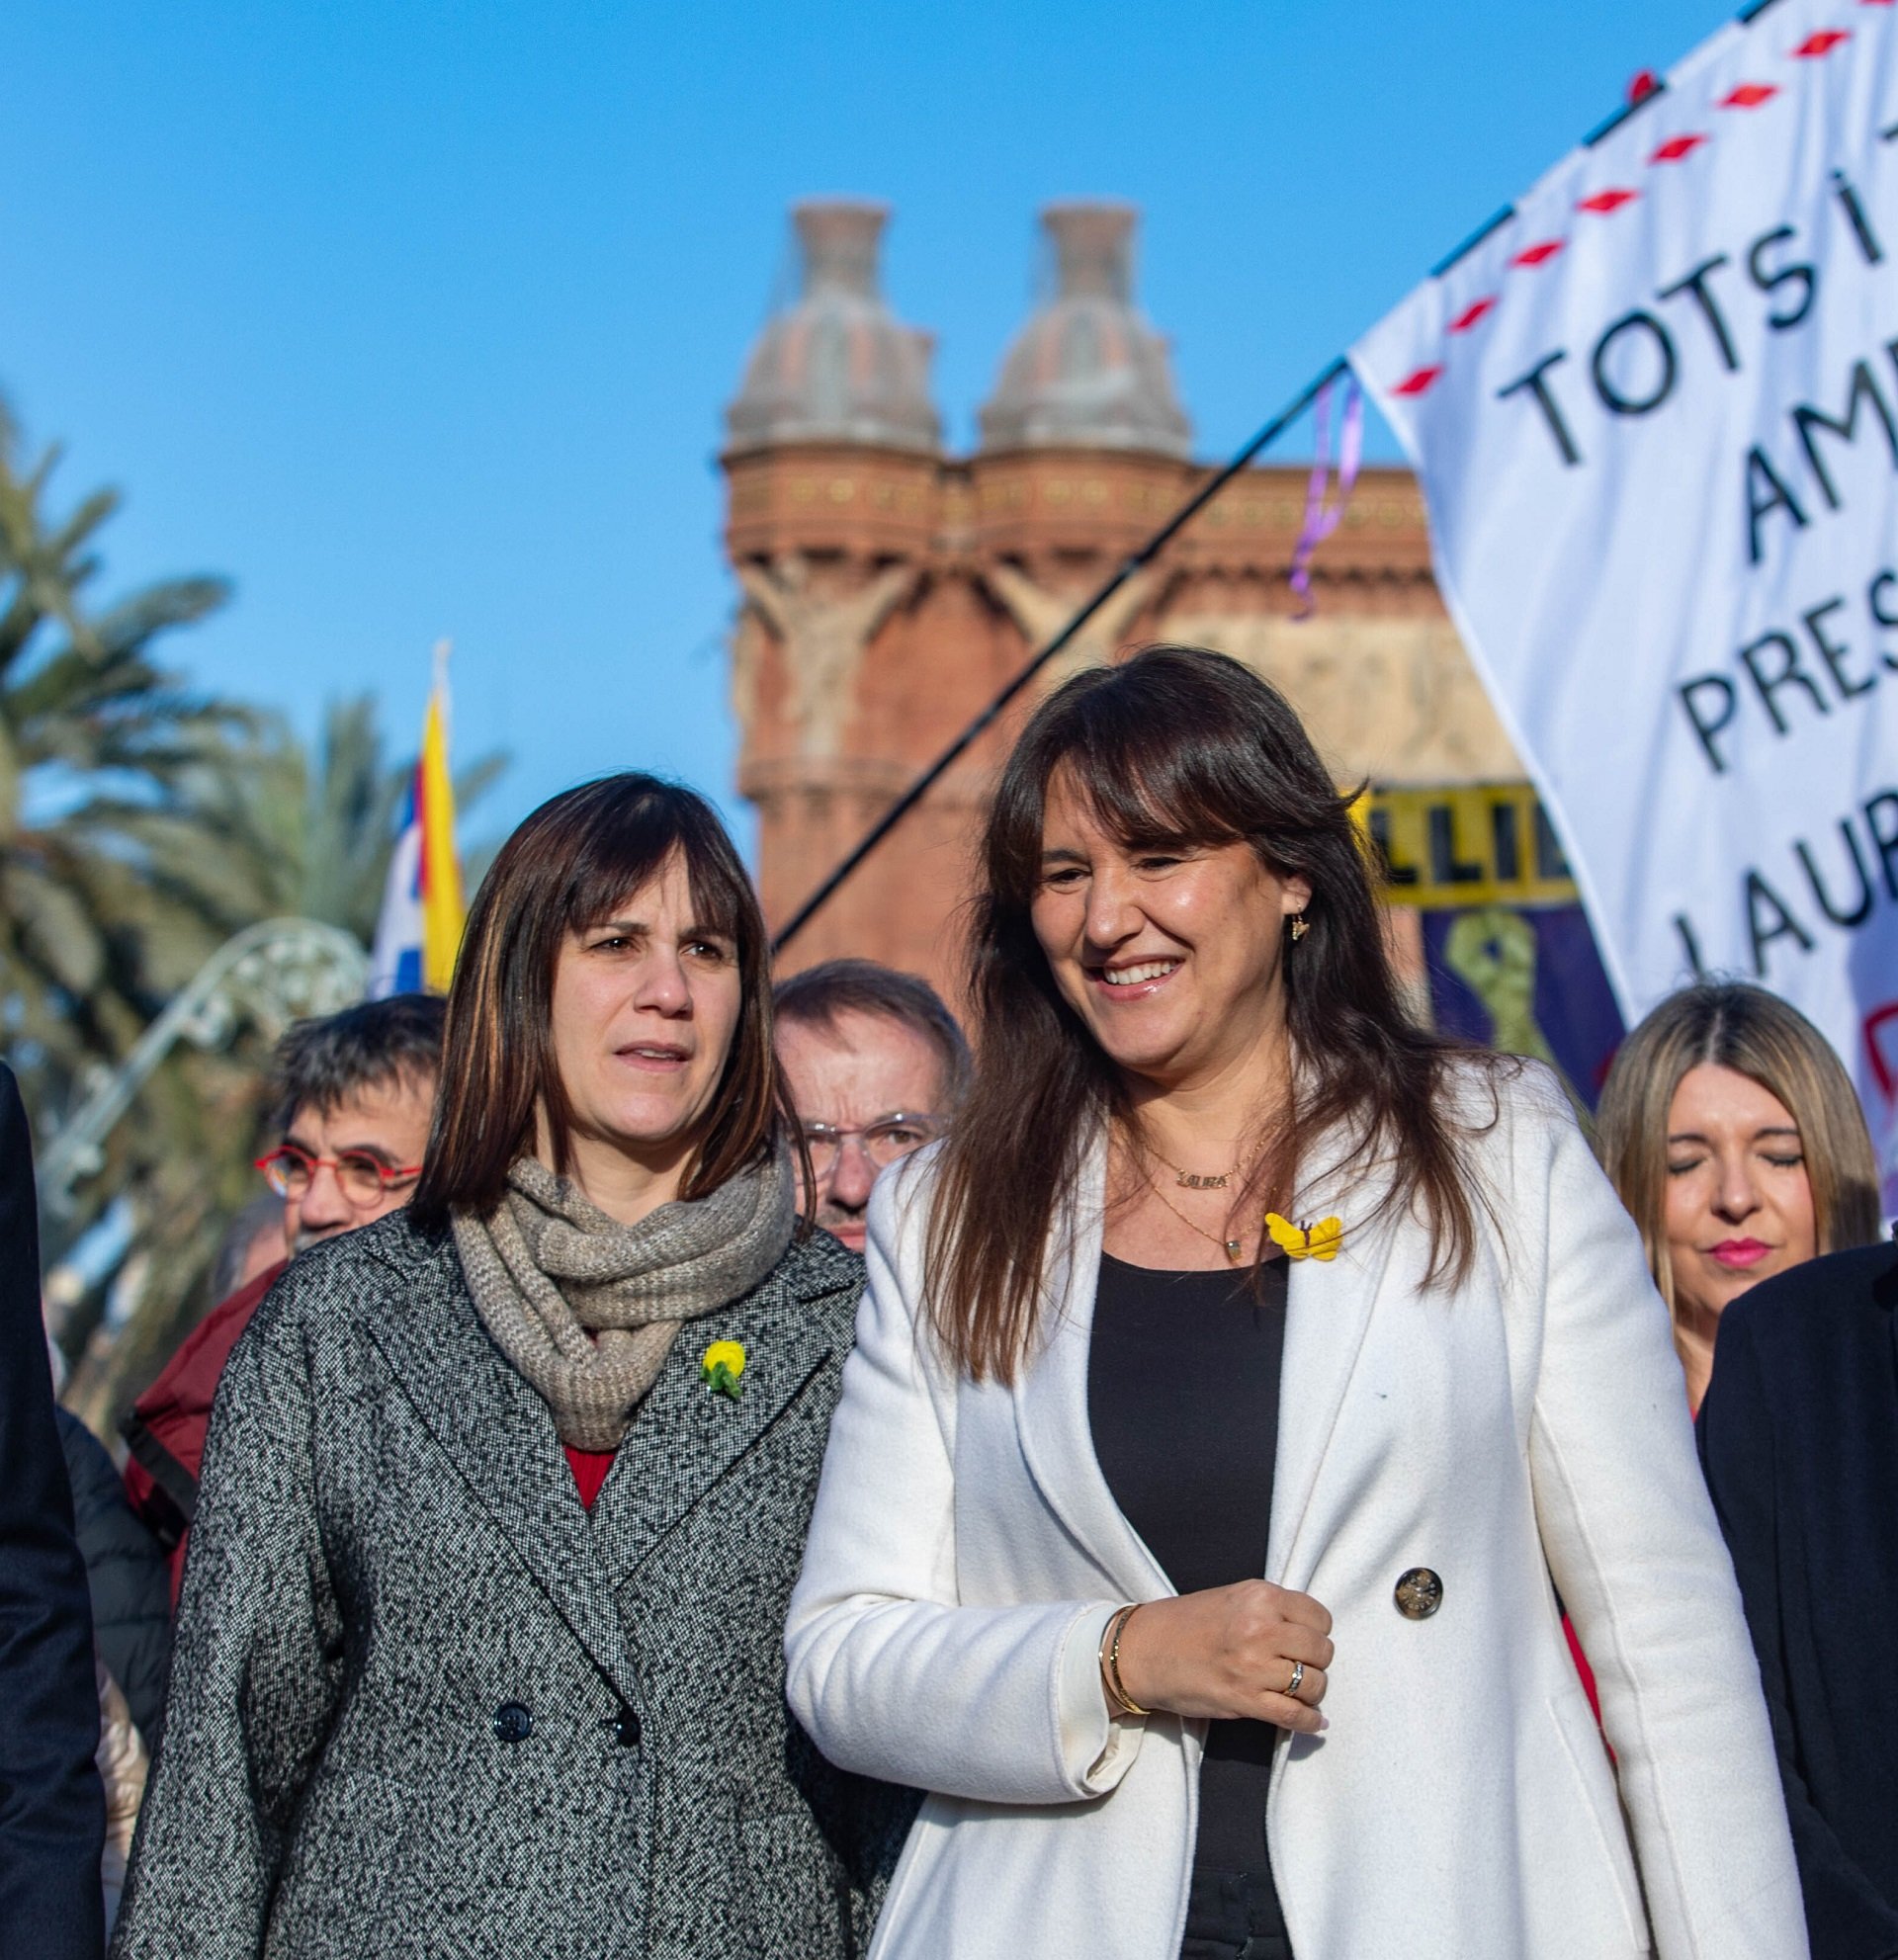 Junts reclama al Parlament restituir a Borràs: "La sentencia muestra que no hay corrupción"